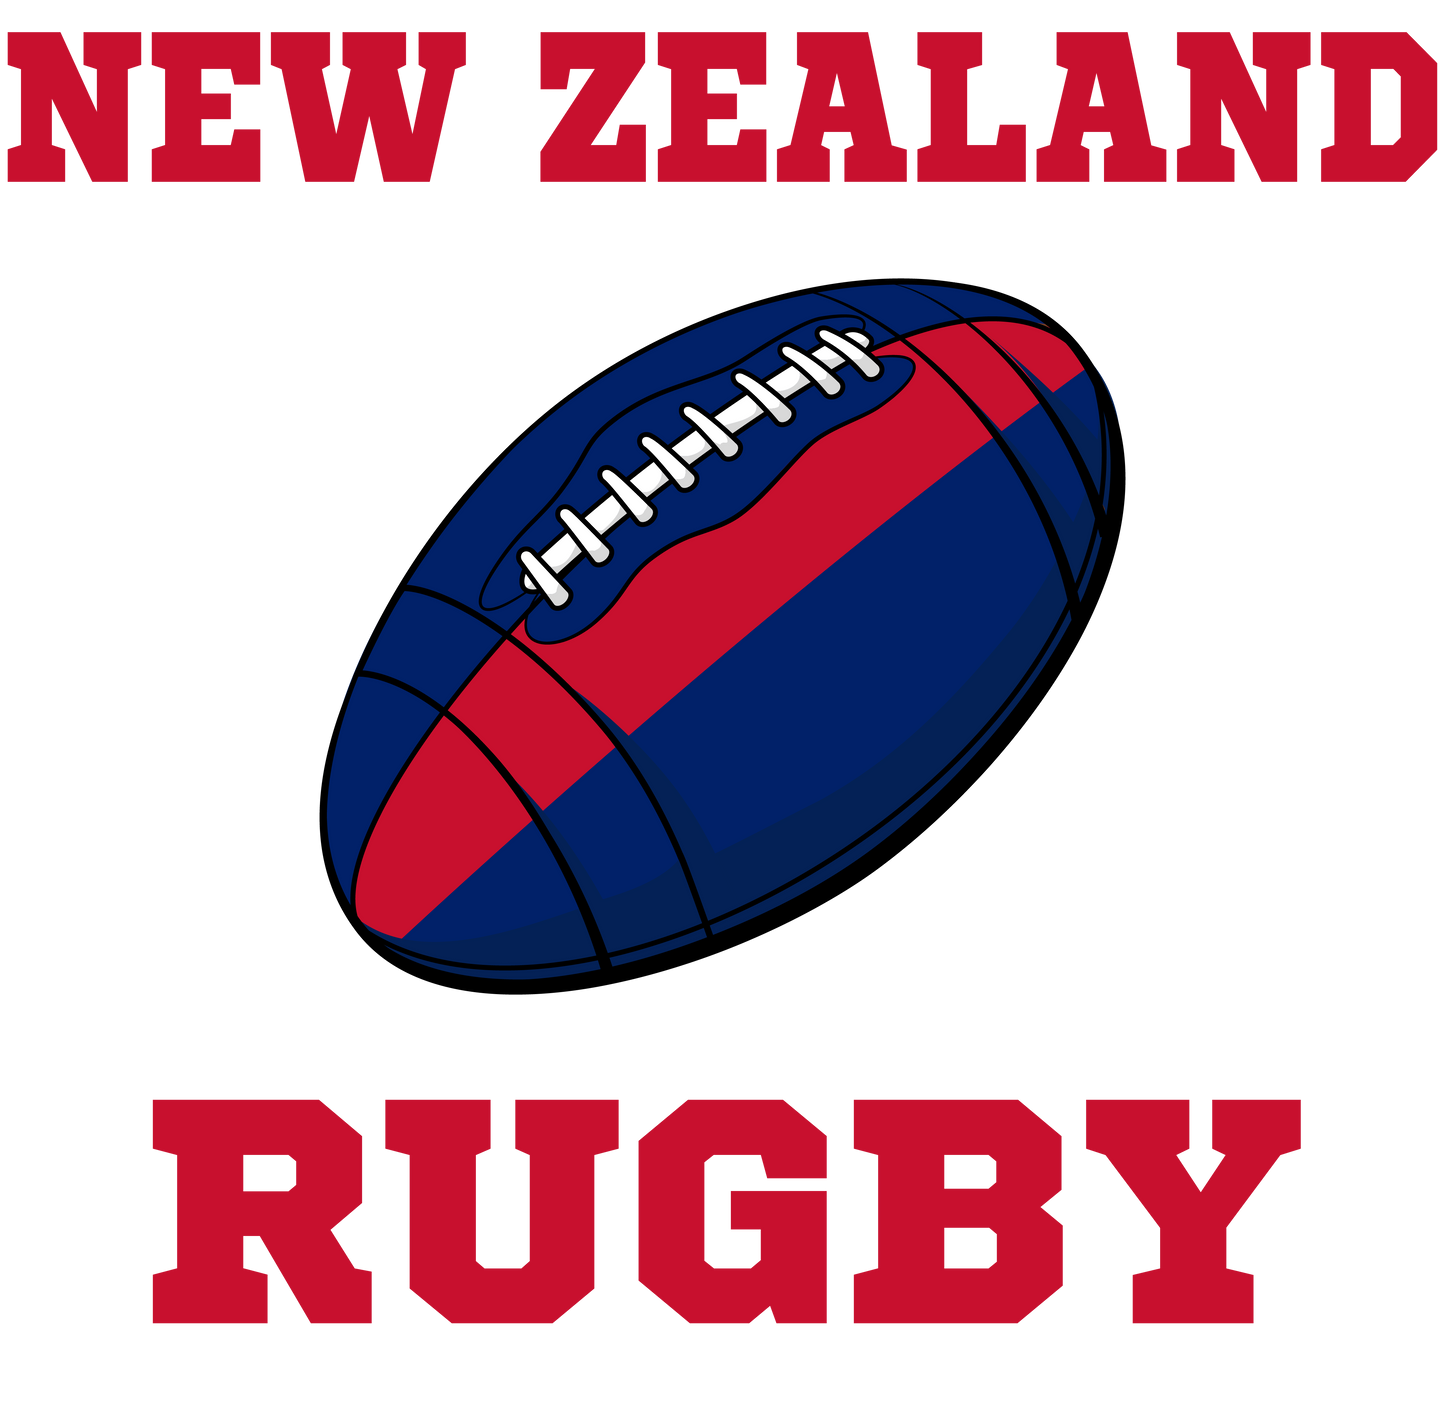 New Zealand Rugby Ball Mug (White)